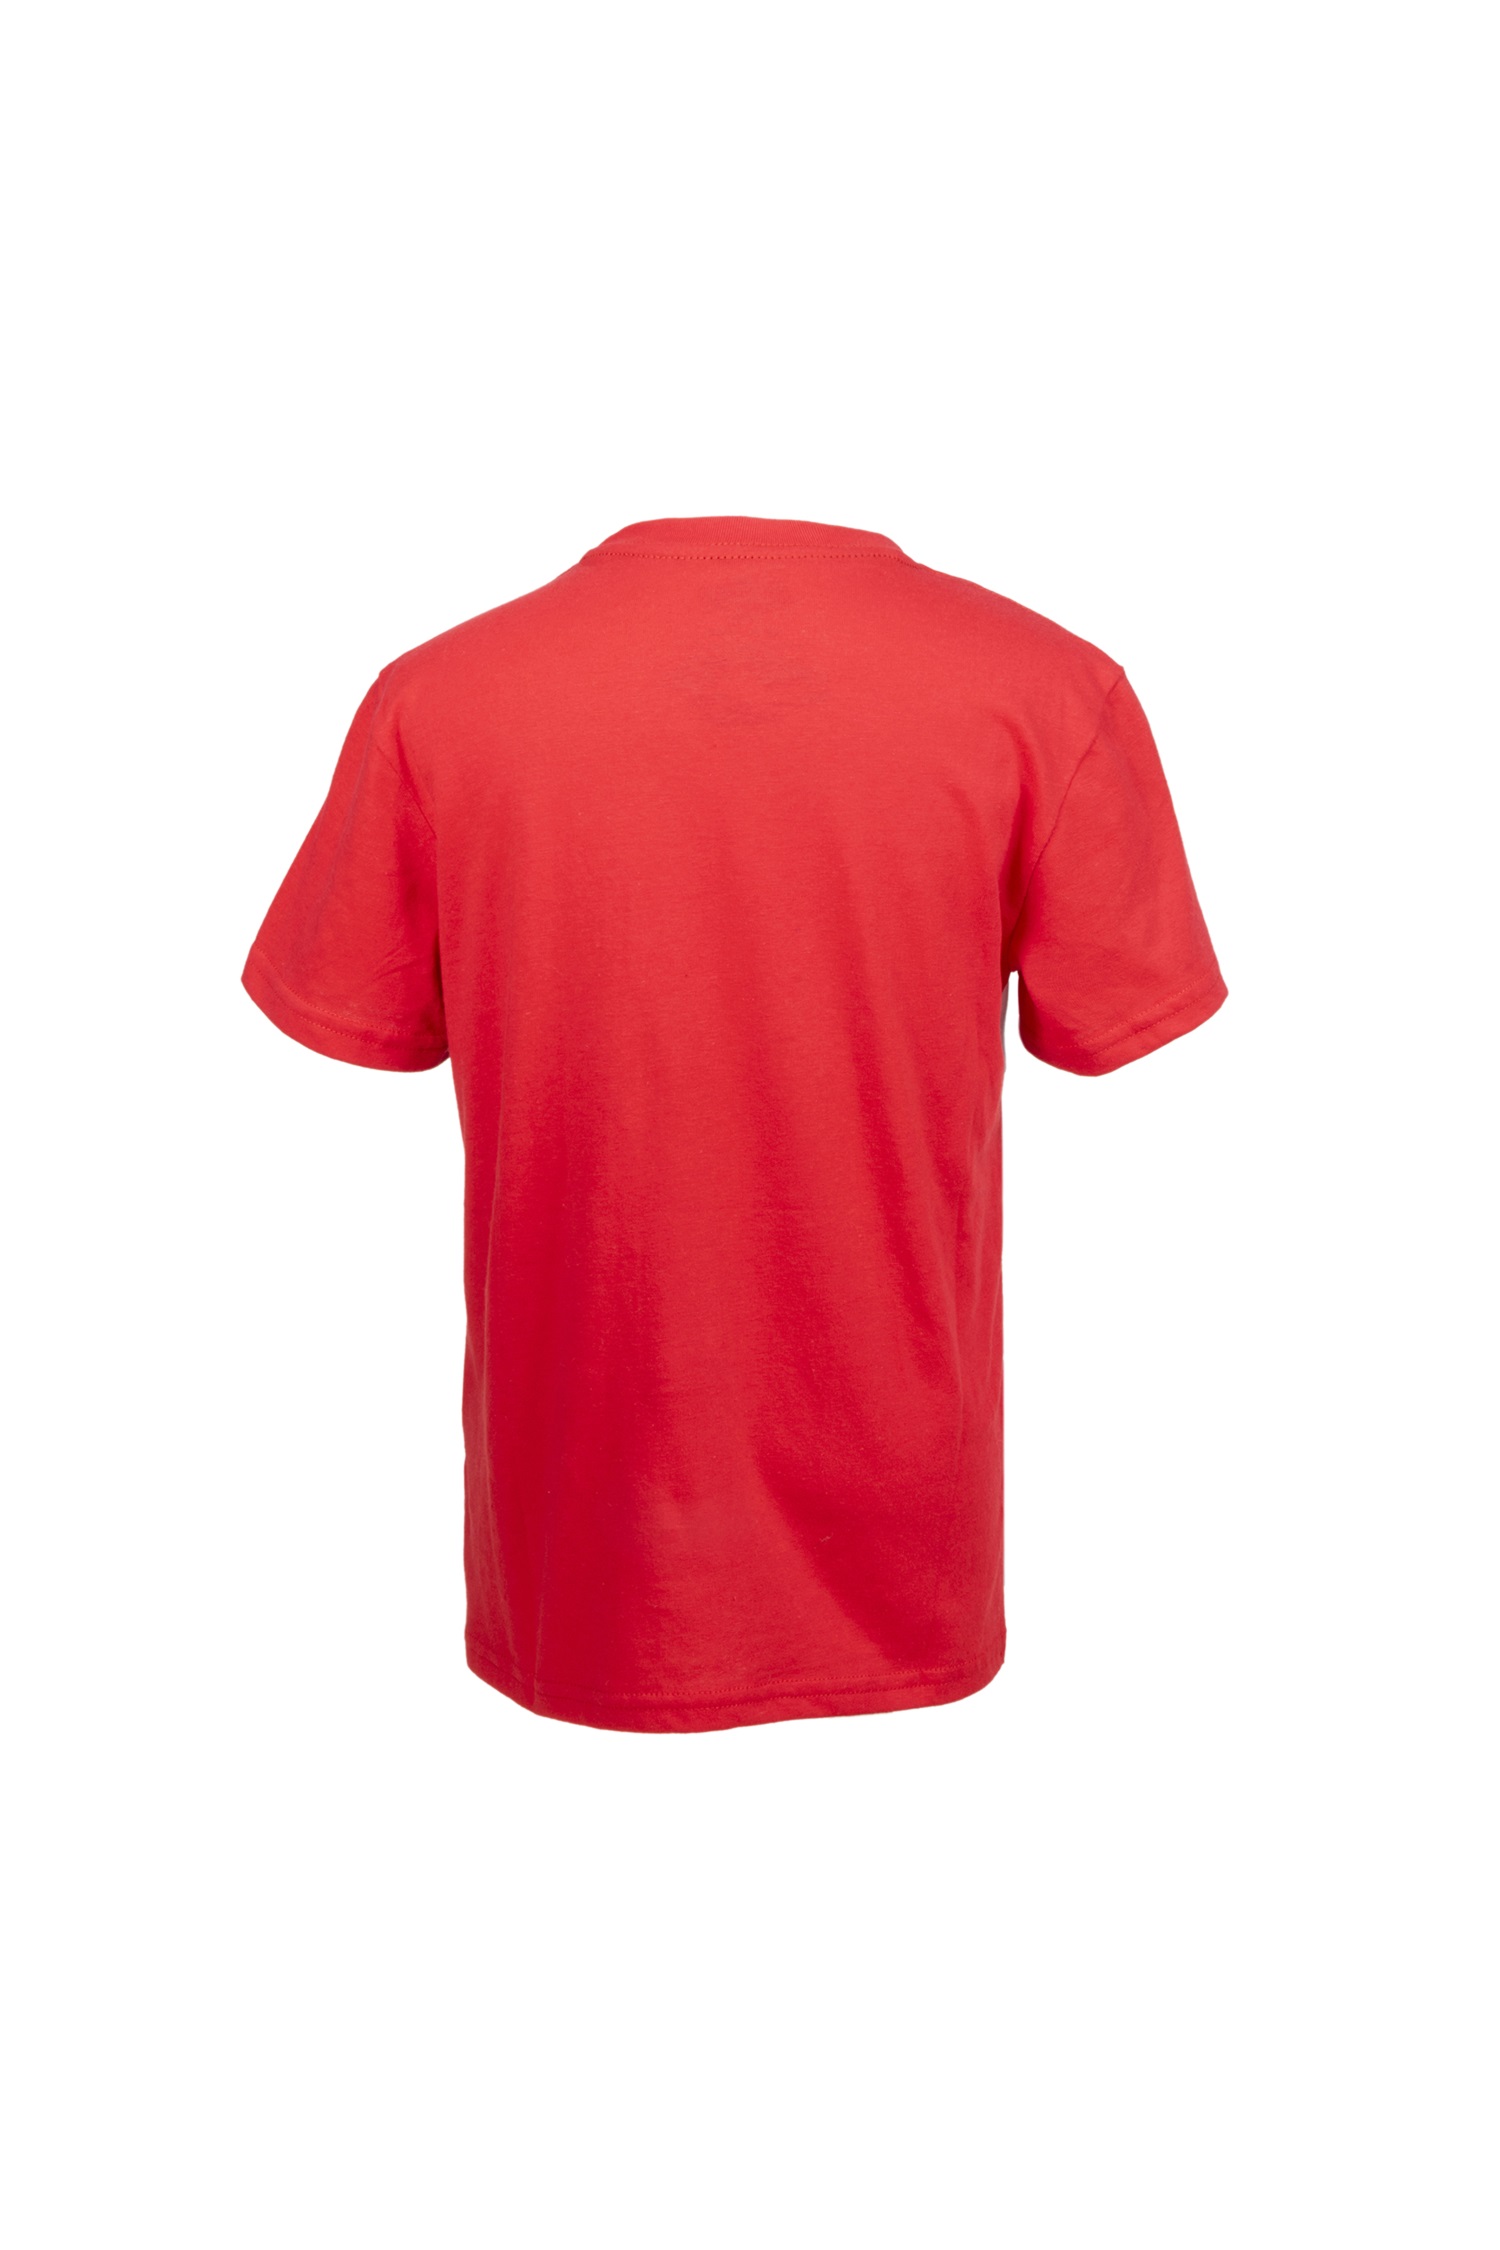 Crew-Neck Kid′s T-Shirt Round Neck T Shirt with Printing